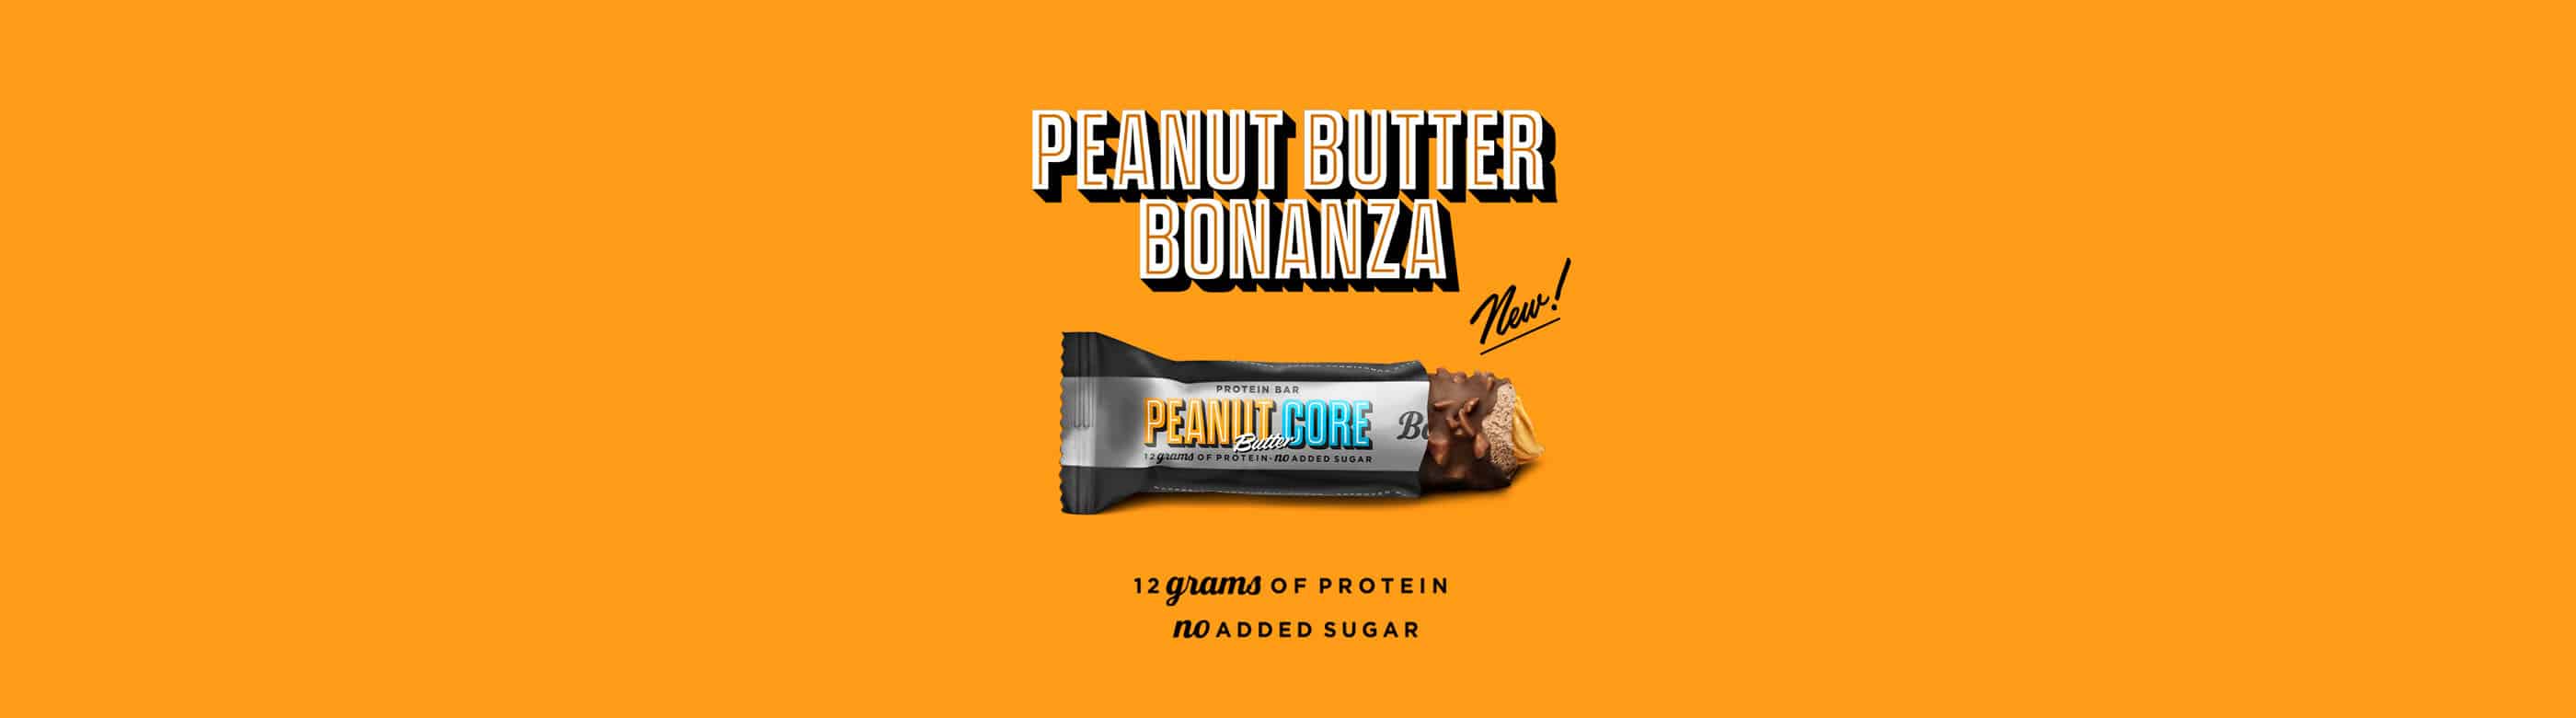 Peanut Butter Bonanza